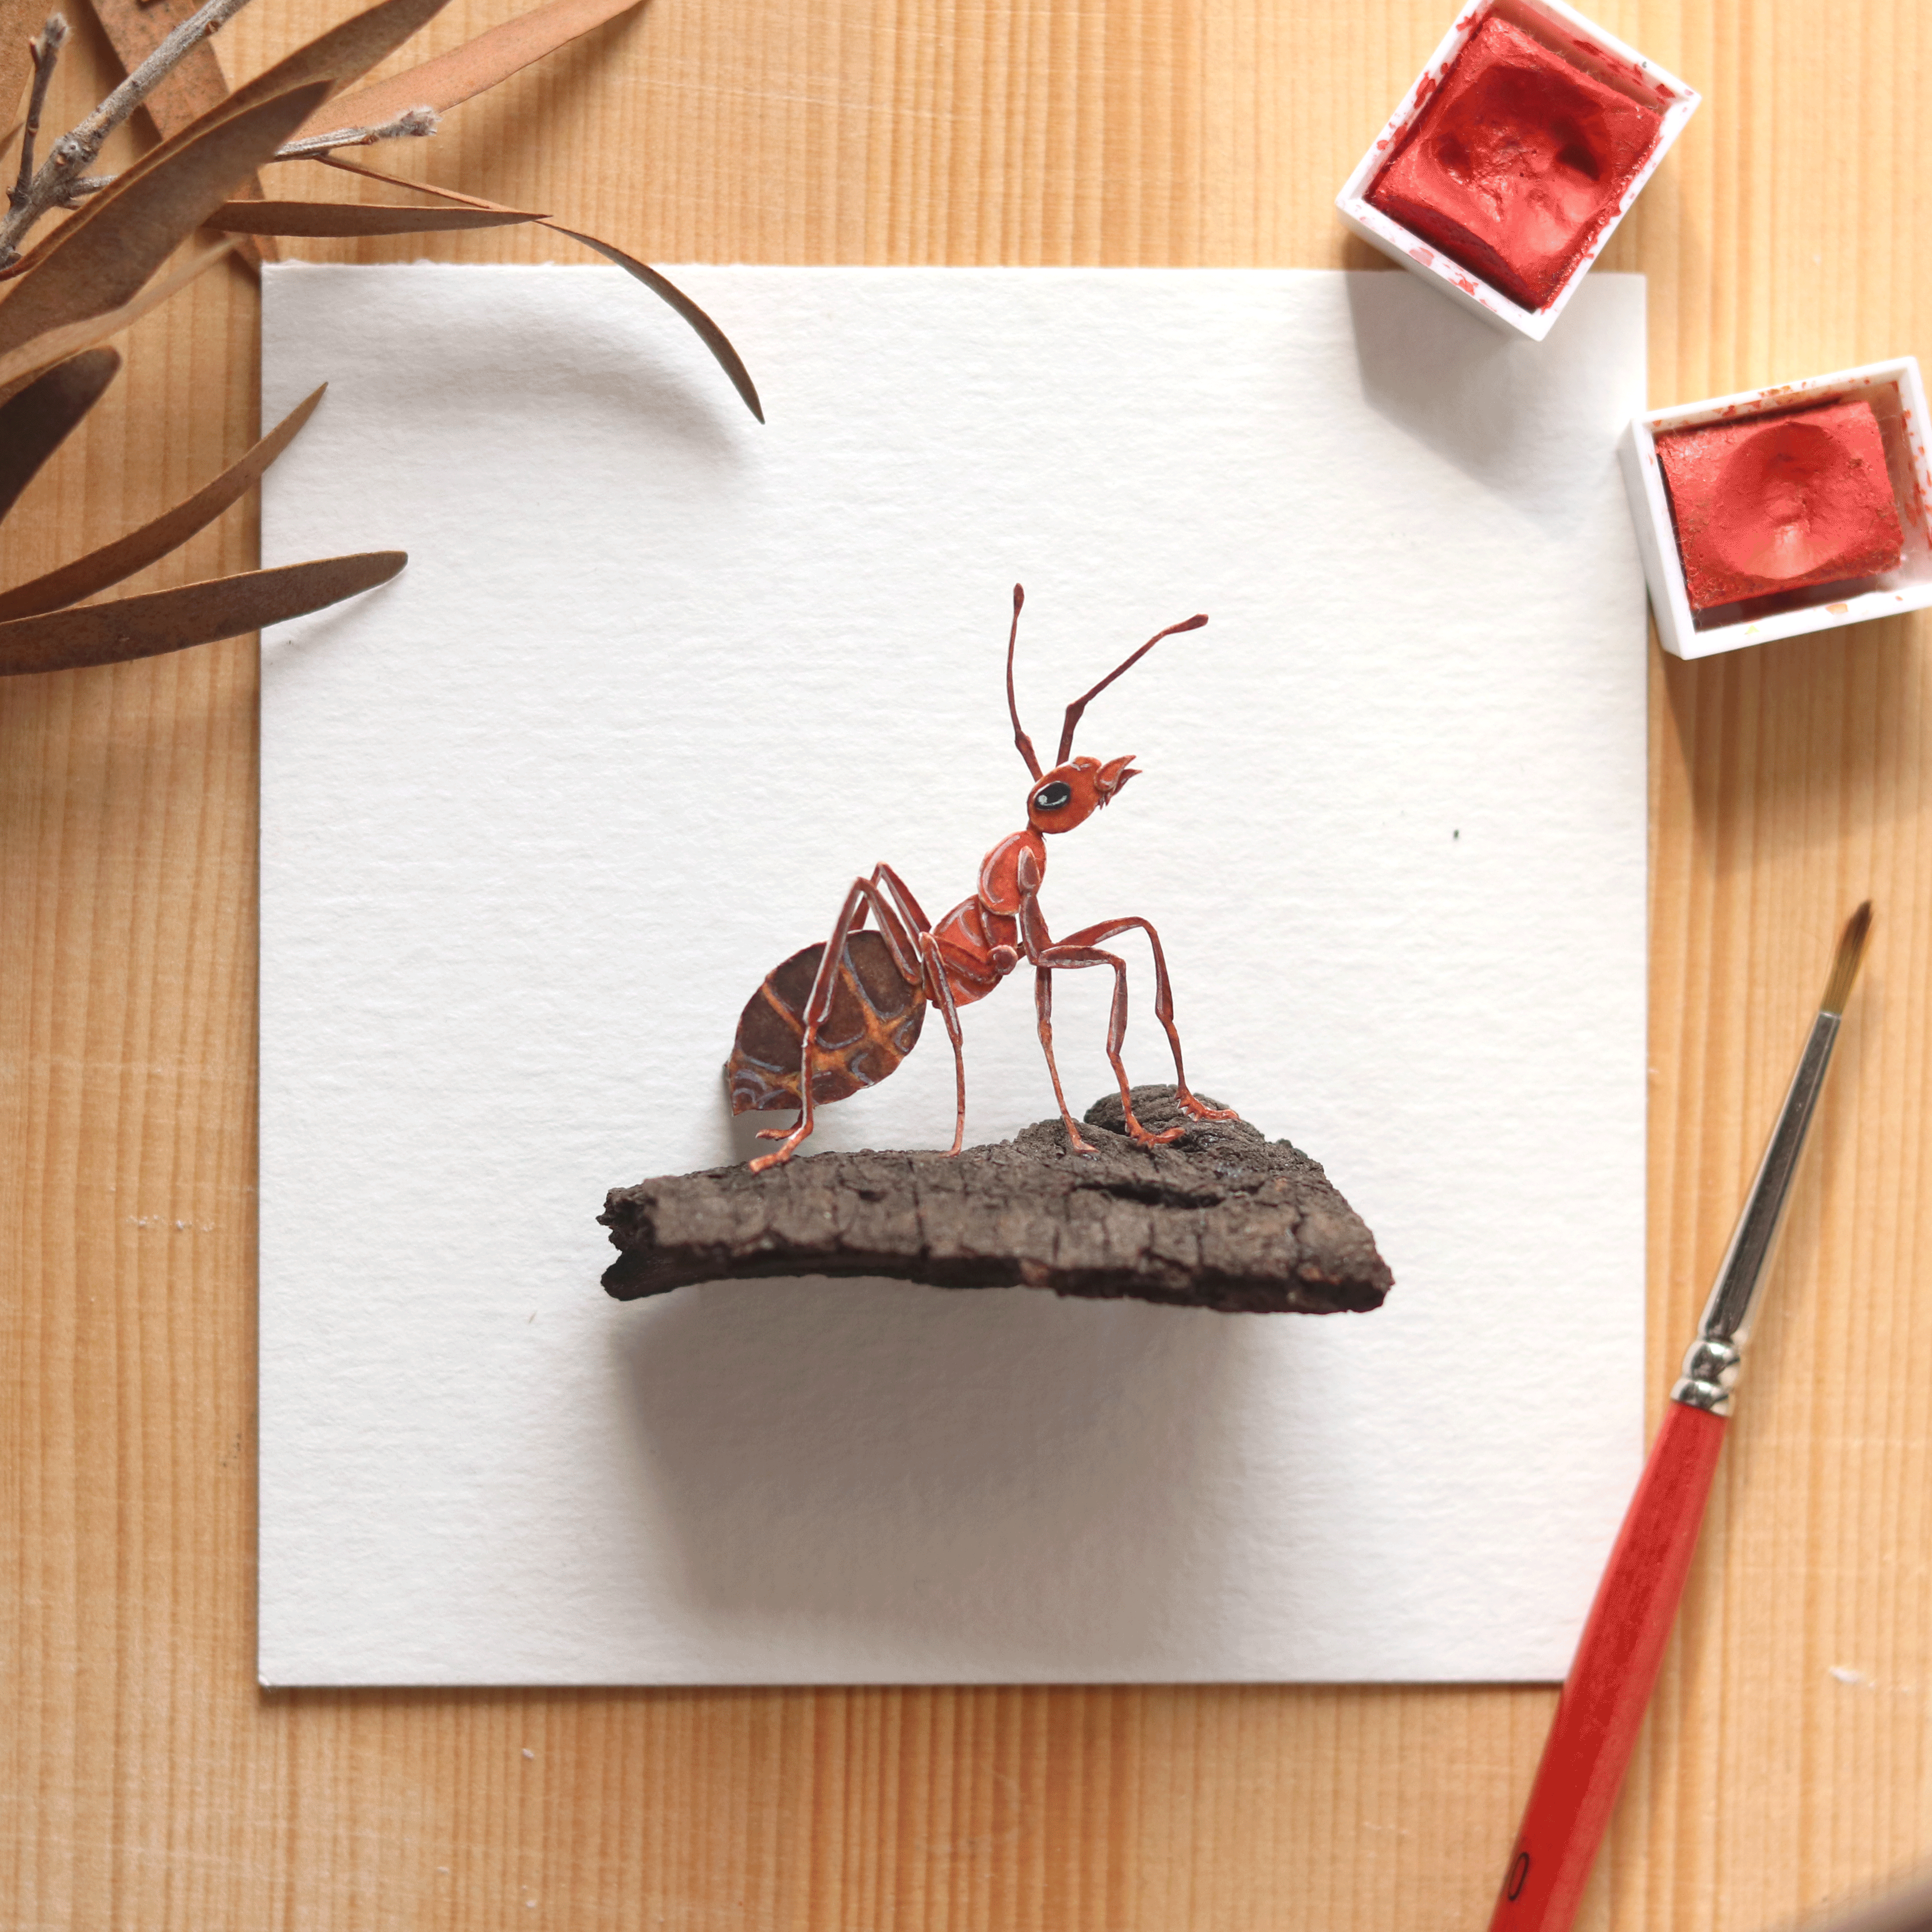 The Fire Ant - Paper Cut art